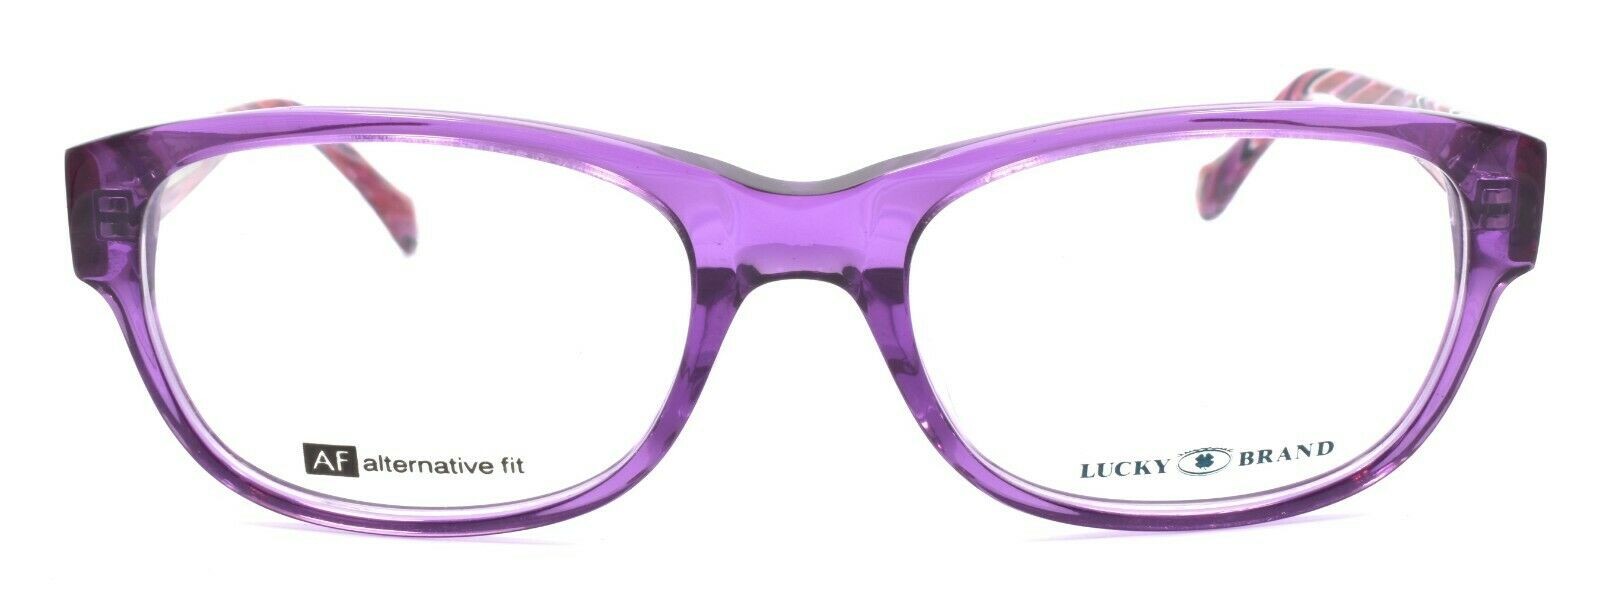 2-LUCKY BRAND PCH AF Women's Eyeglasses Frames 52-18-140 Plum + CASE-751286237344-IKSpecs